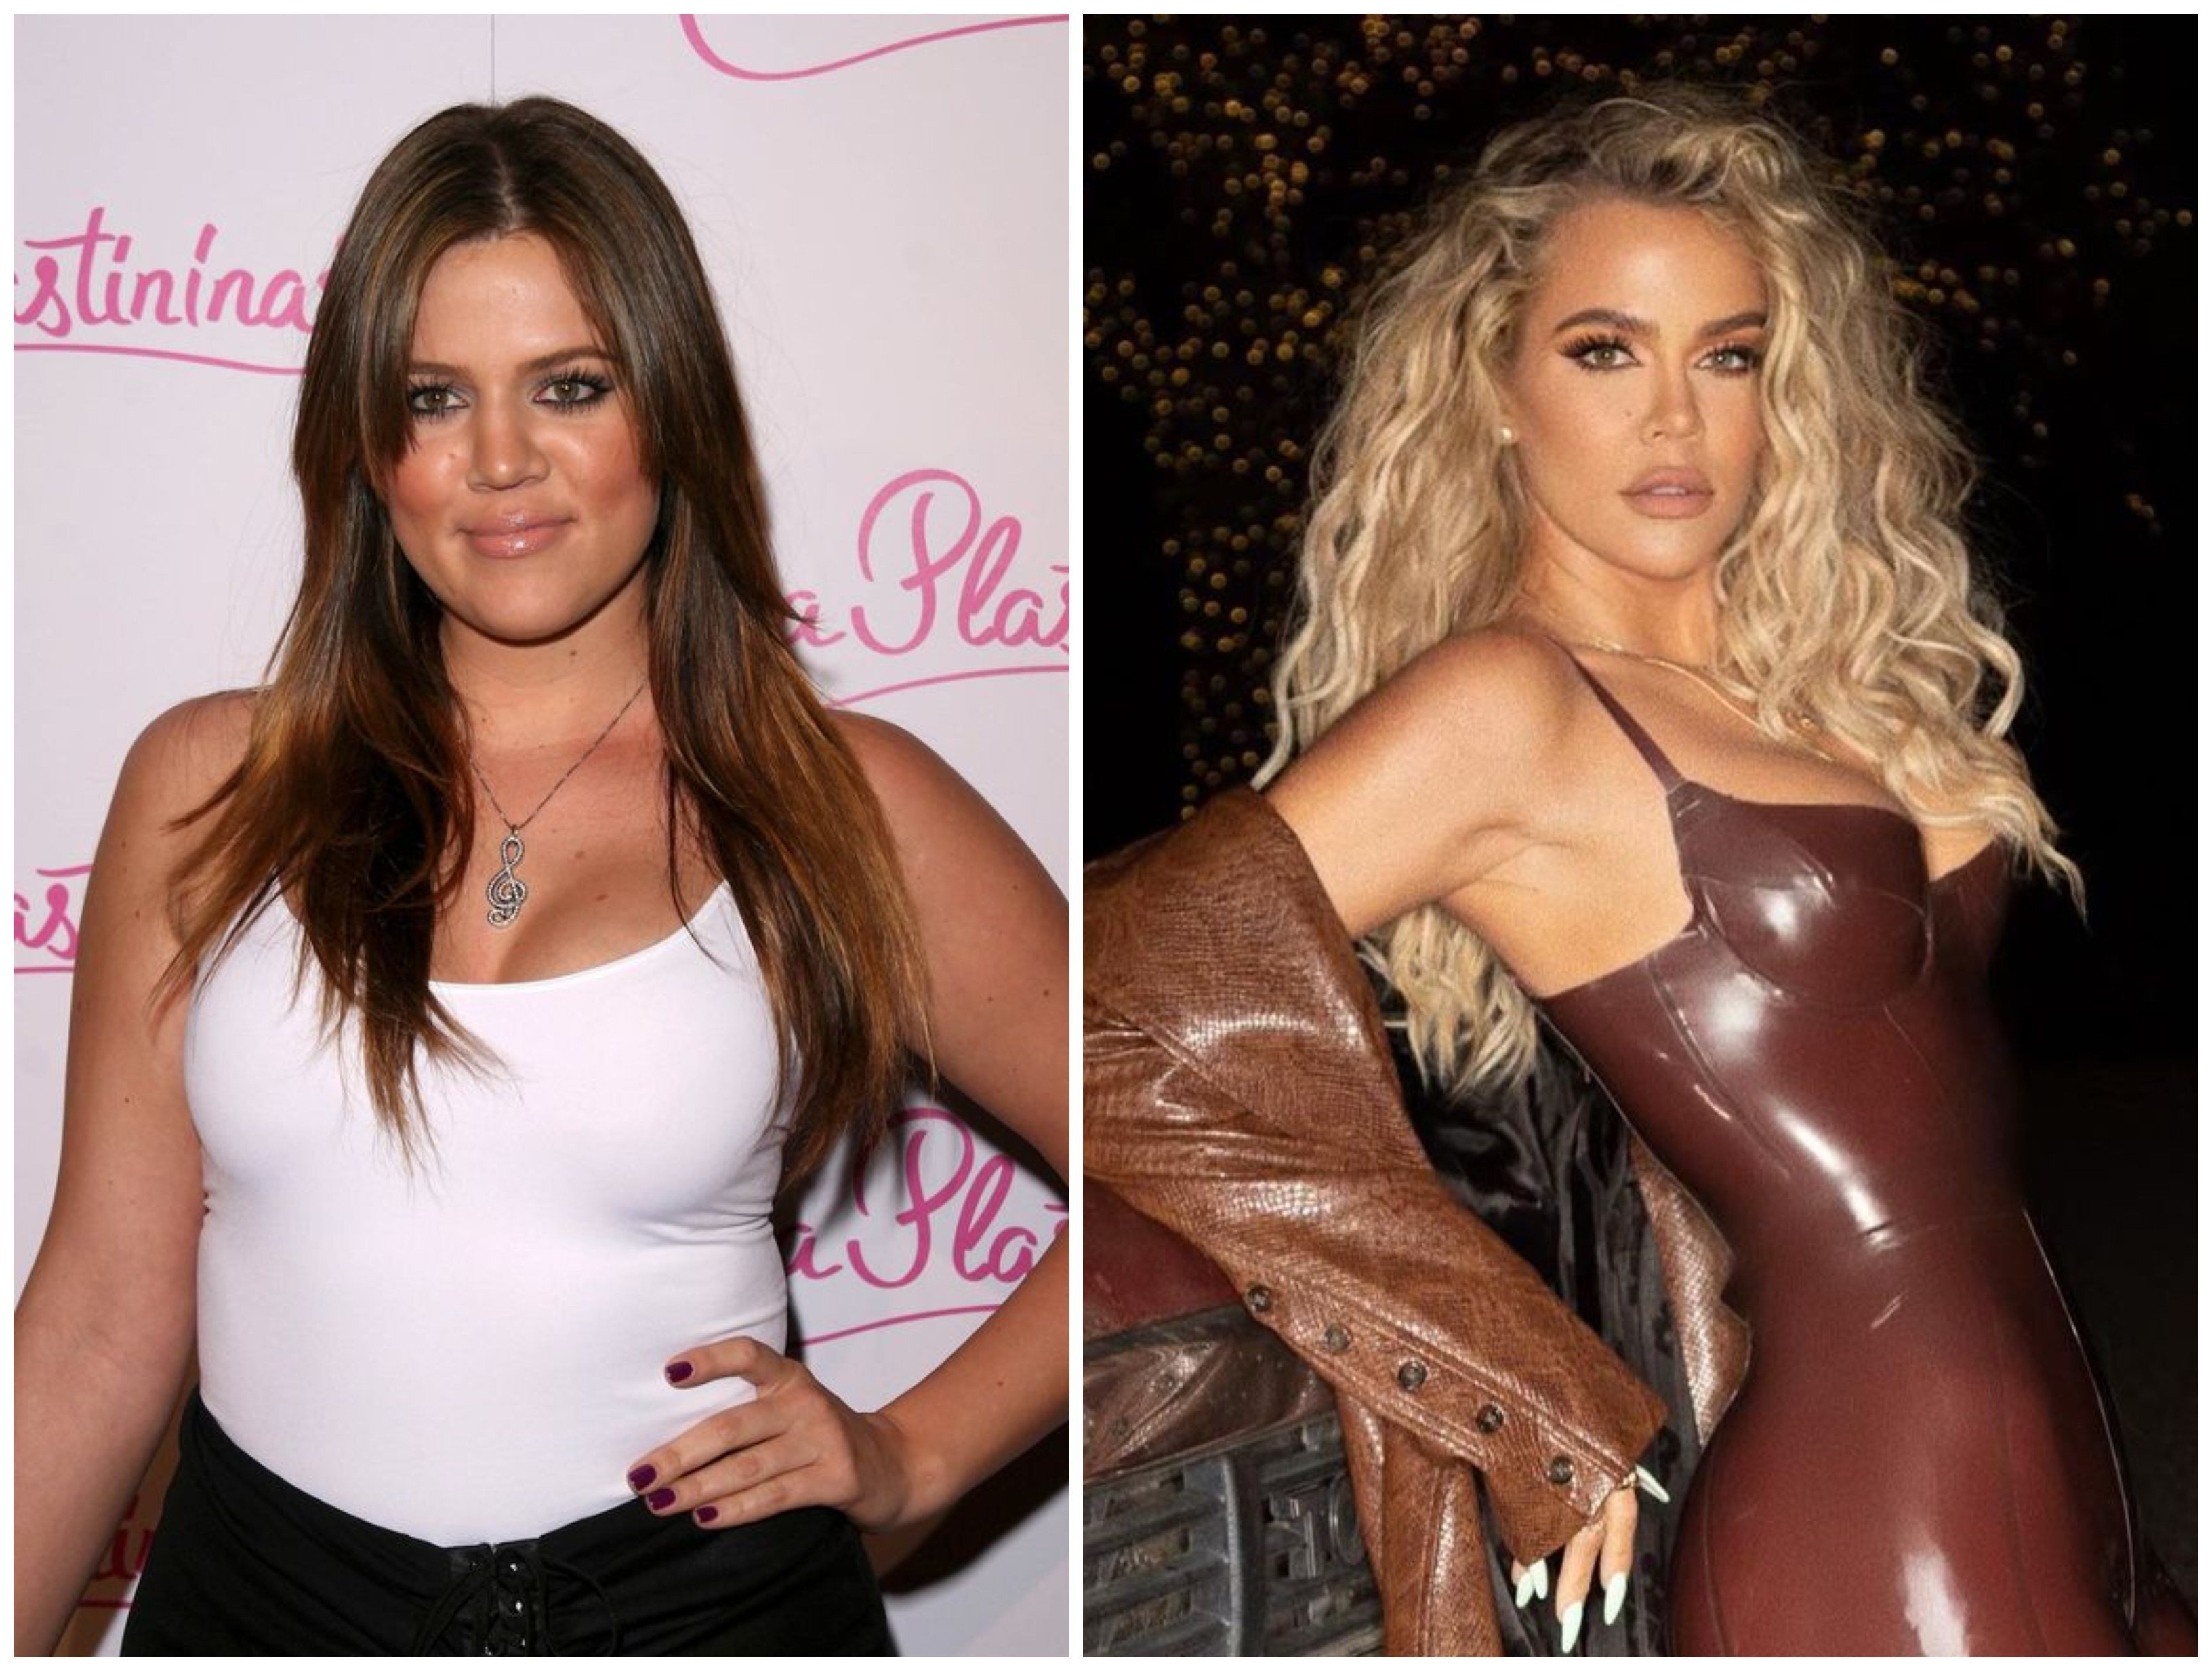 Inside Khloe Kardashian's incredible body transformation: after